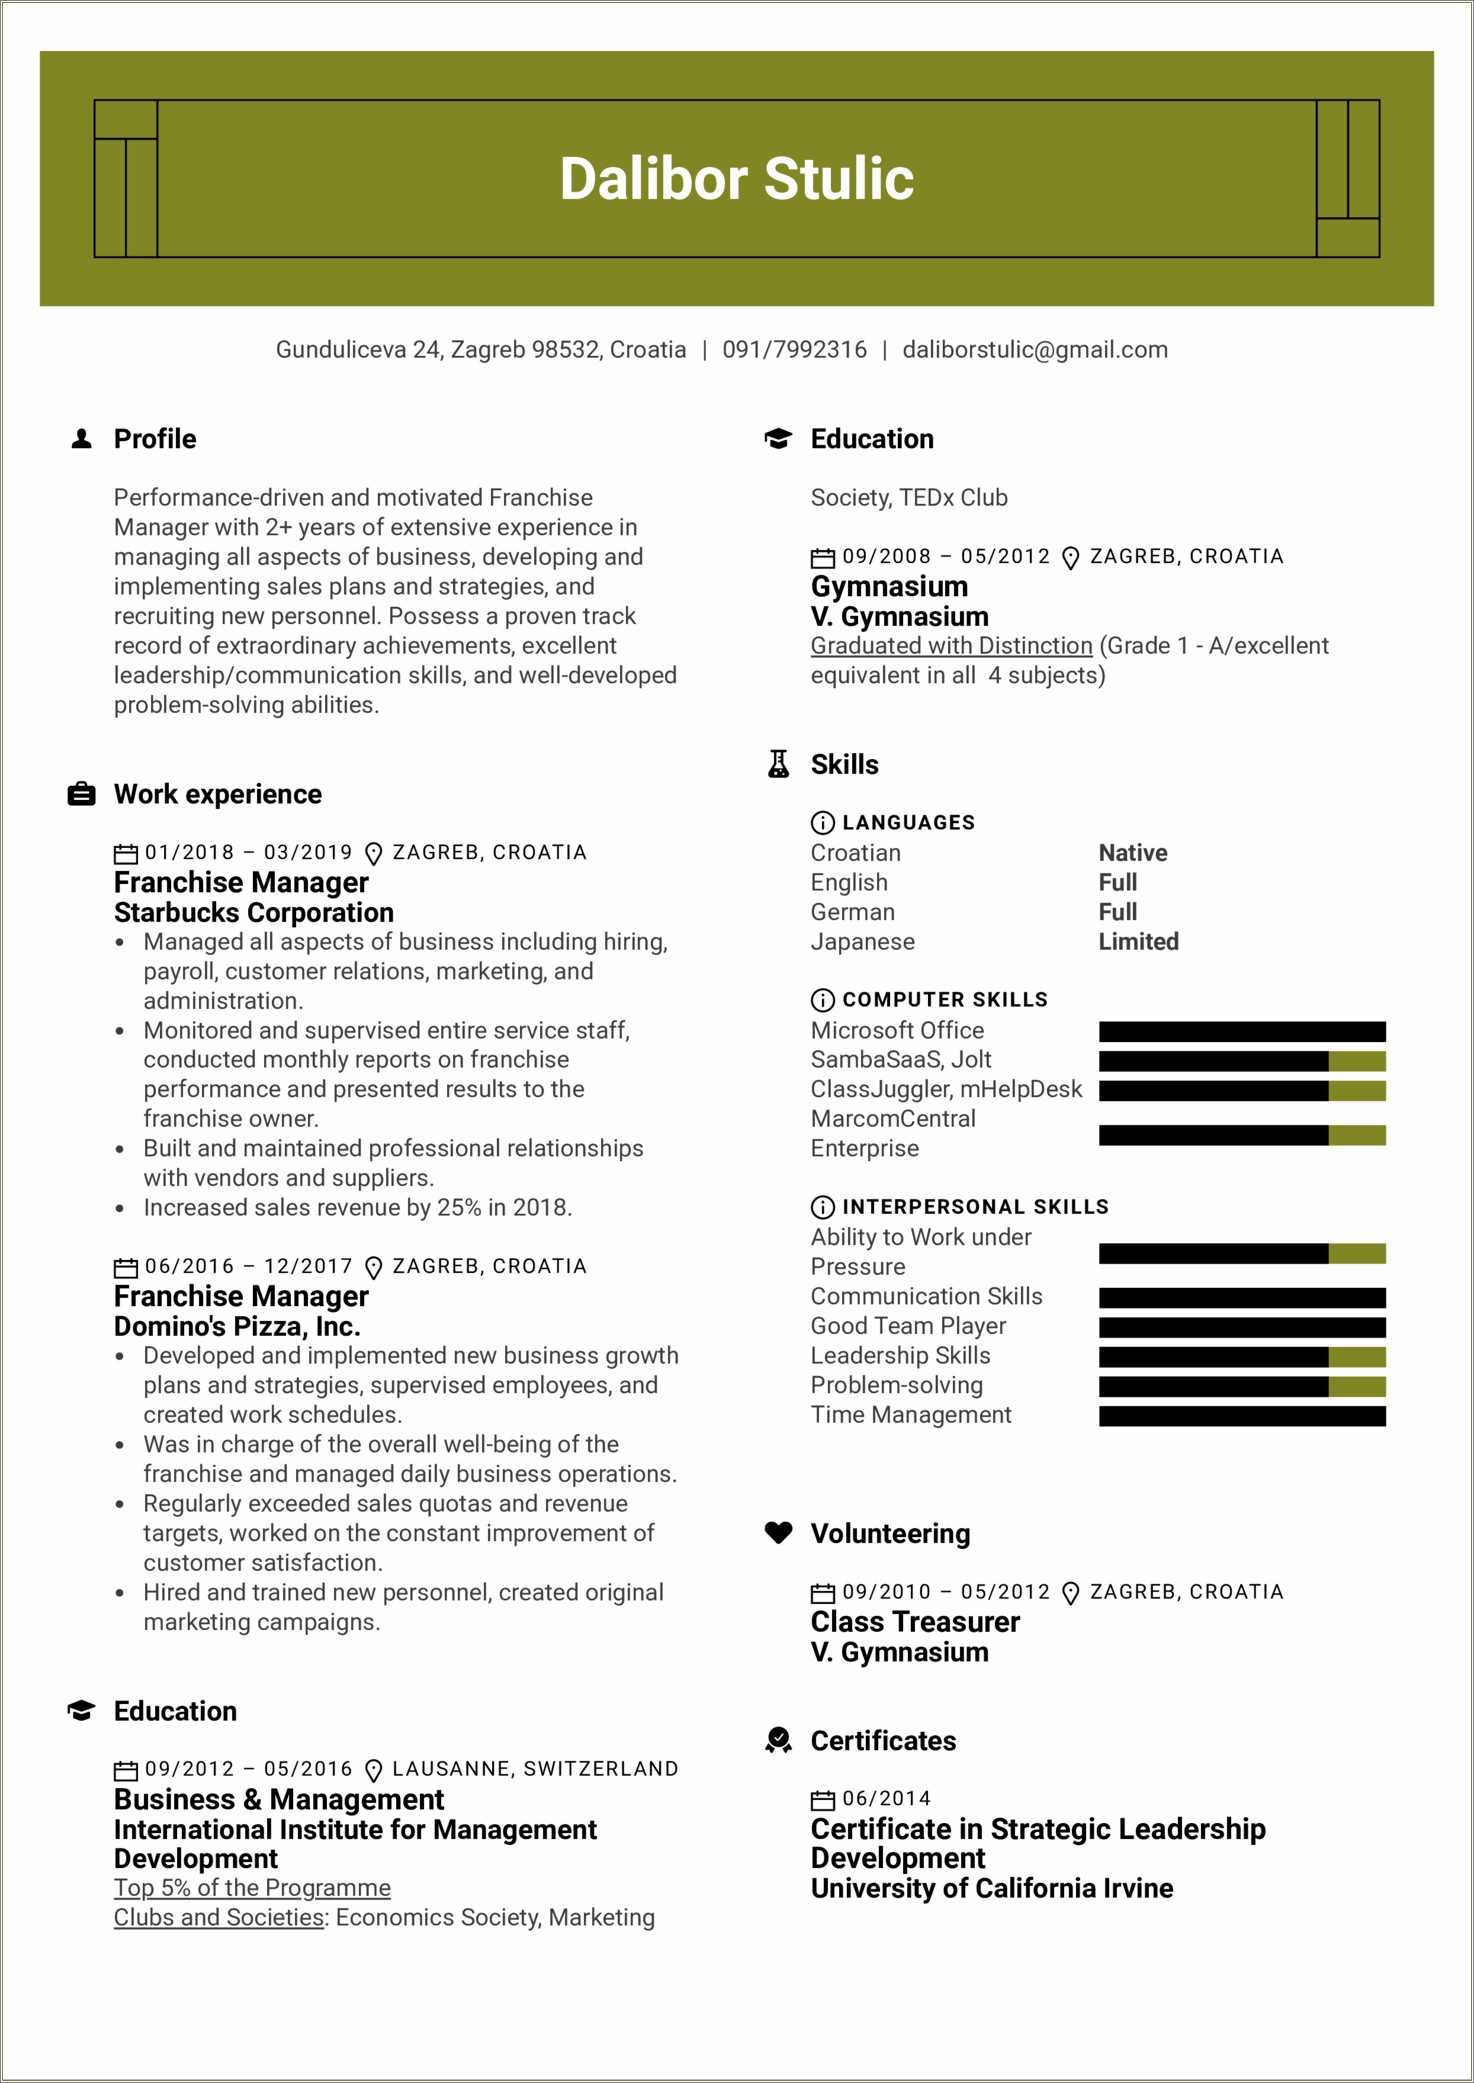 domino-s-pizza-resume-sample-resume-example-gallery